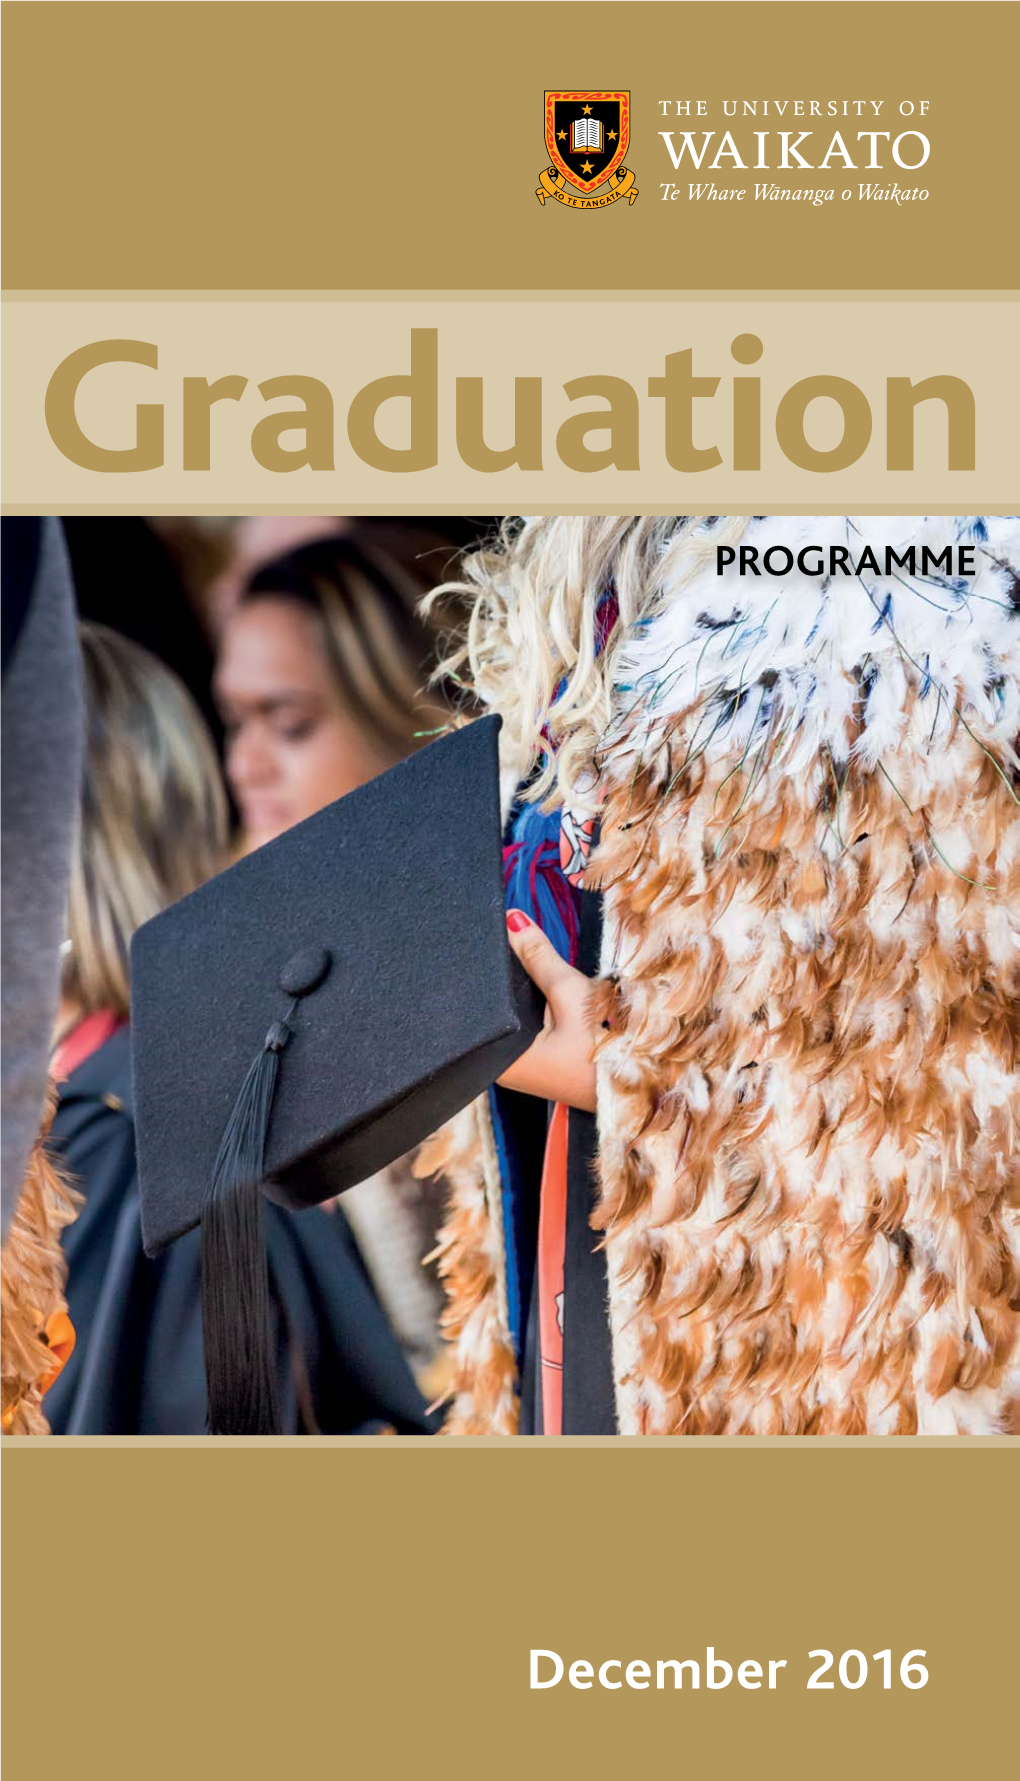 2016 December Graduation Programme